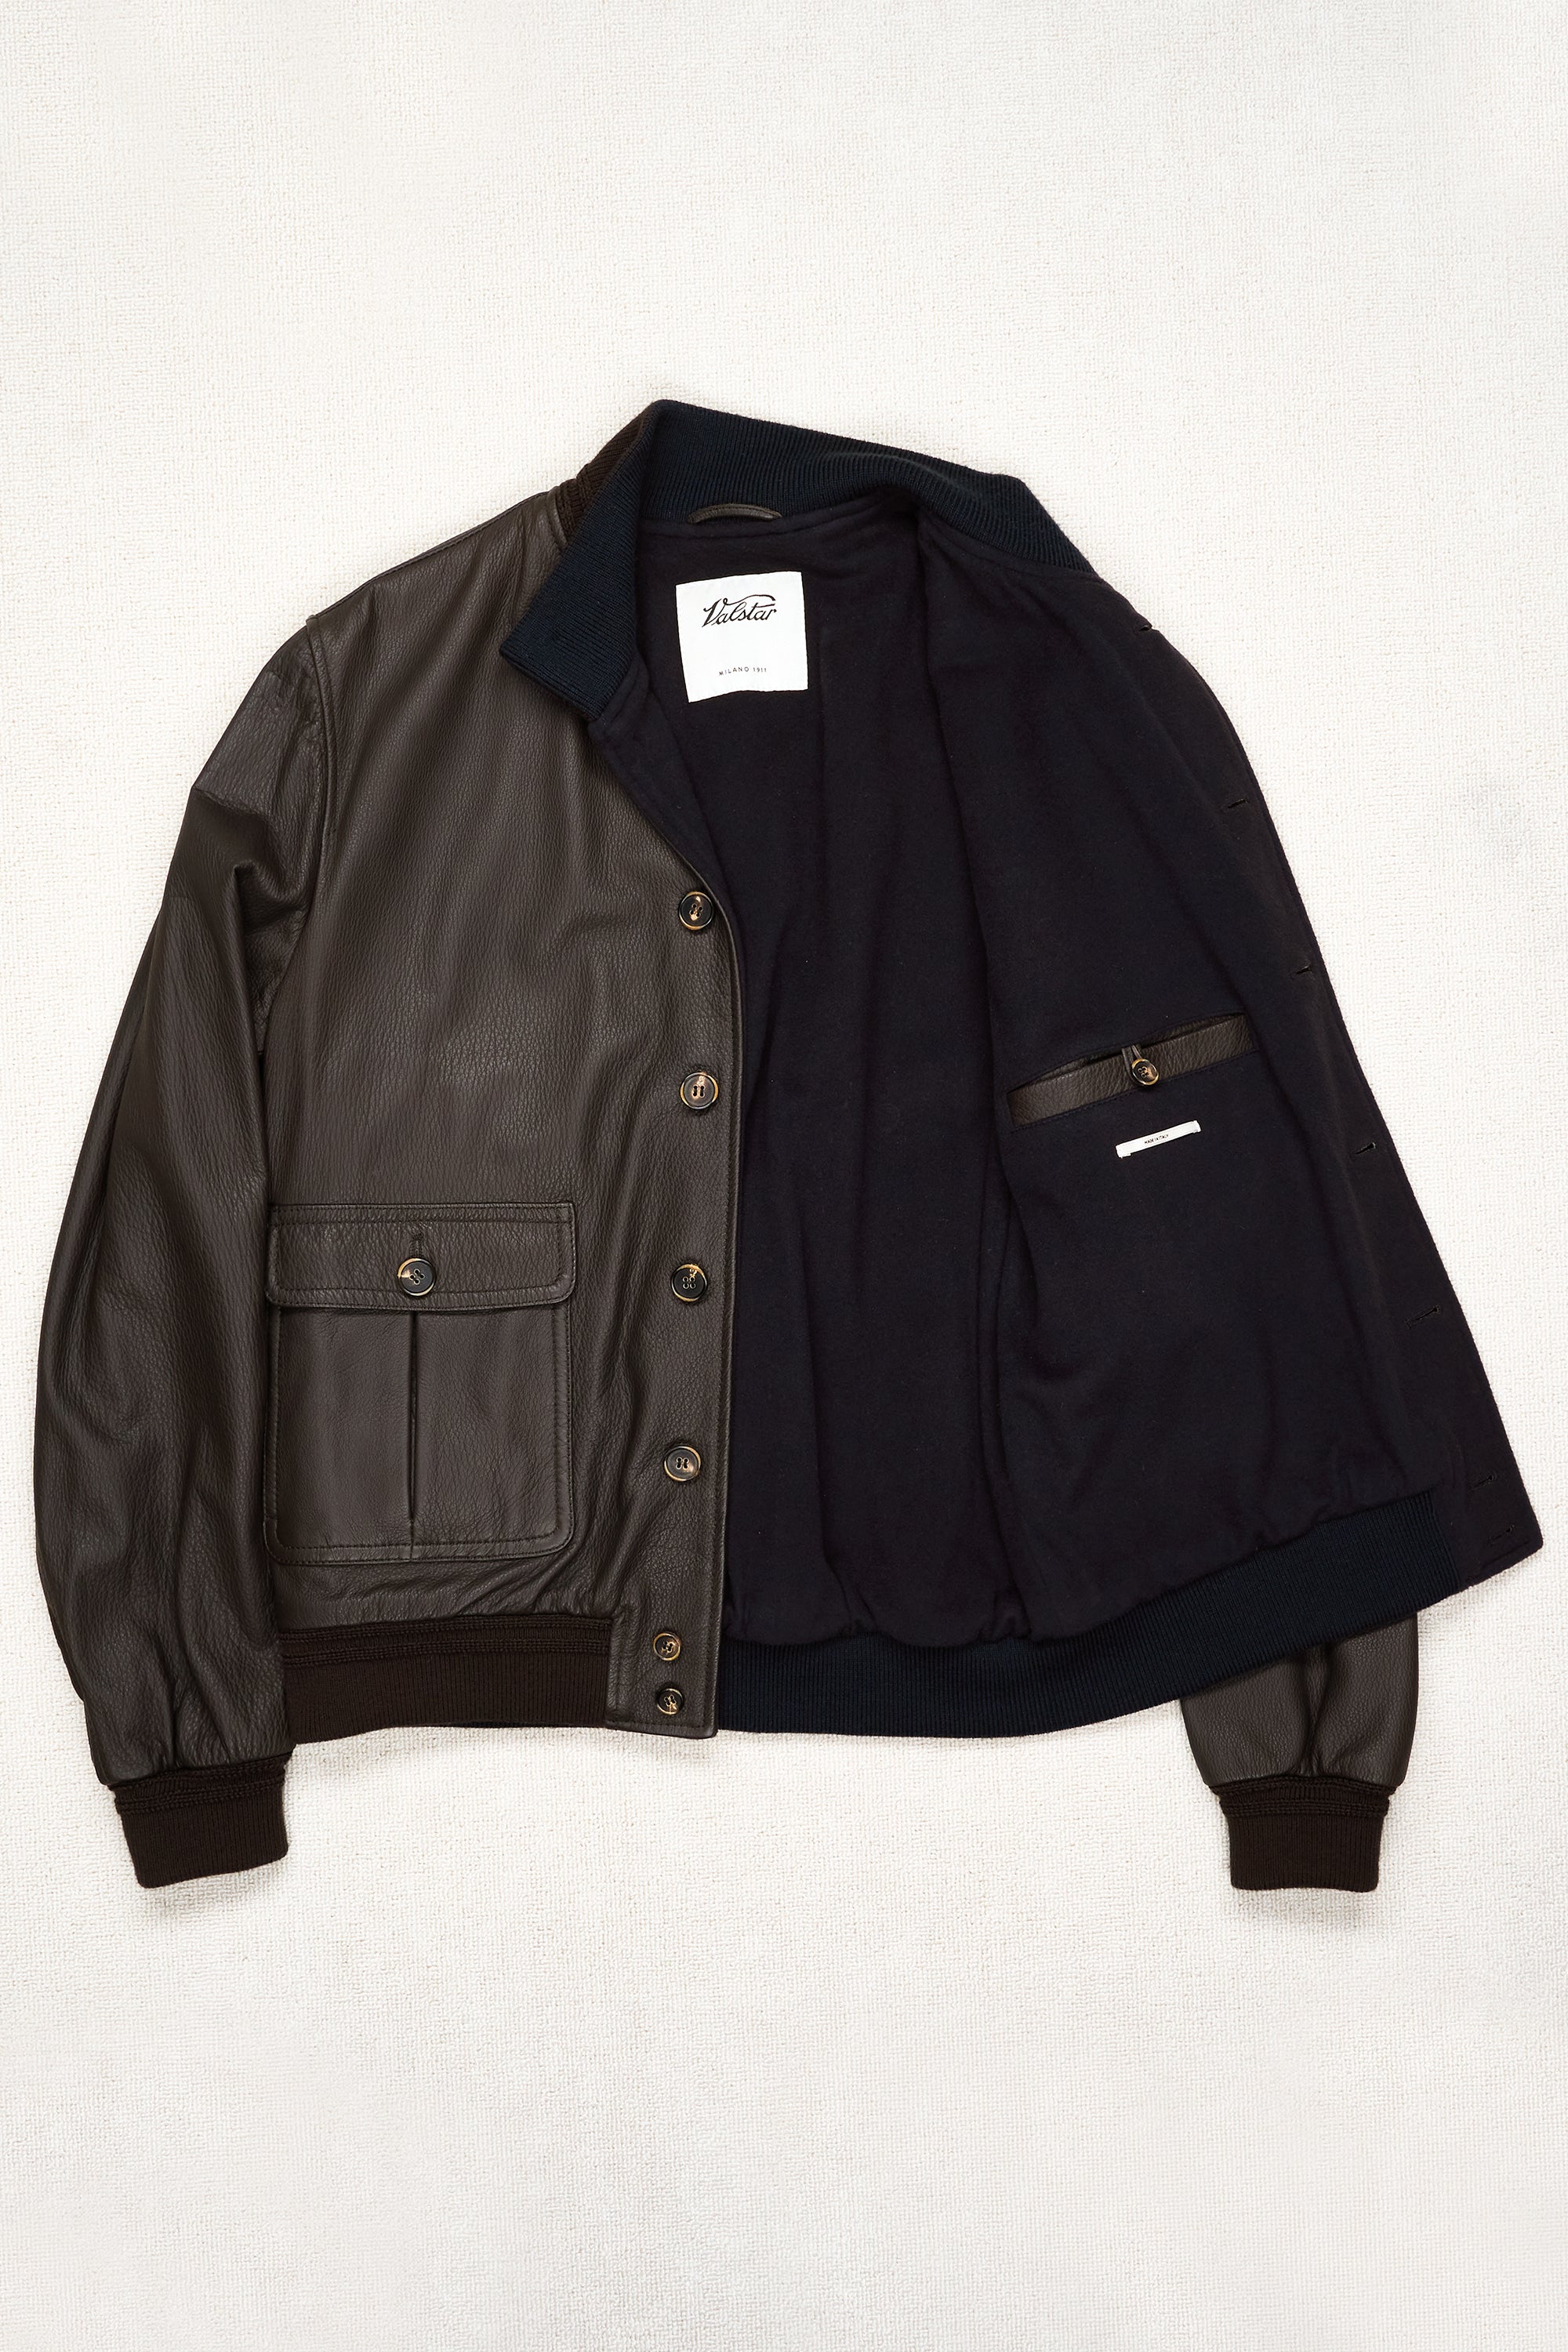 Valstar Brown Deerskin Leather Jacket